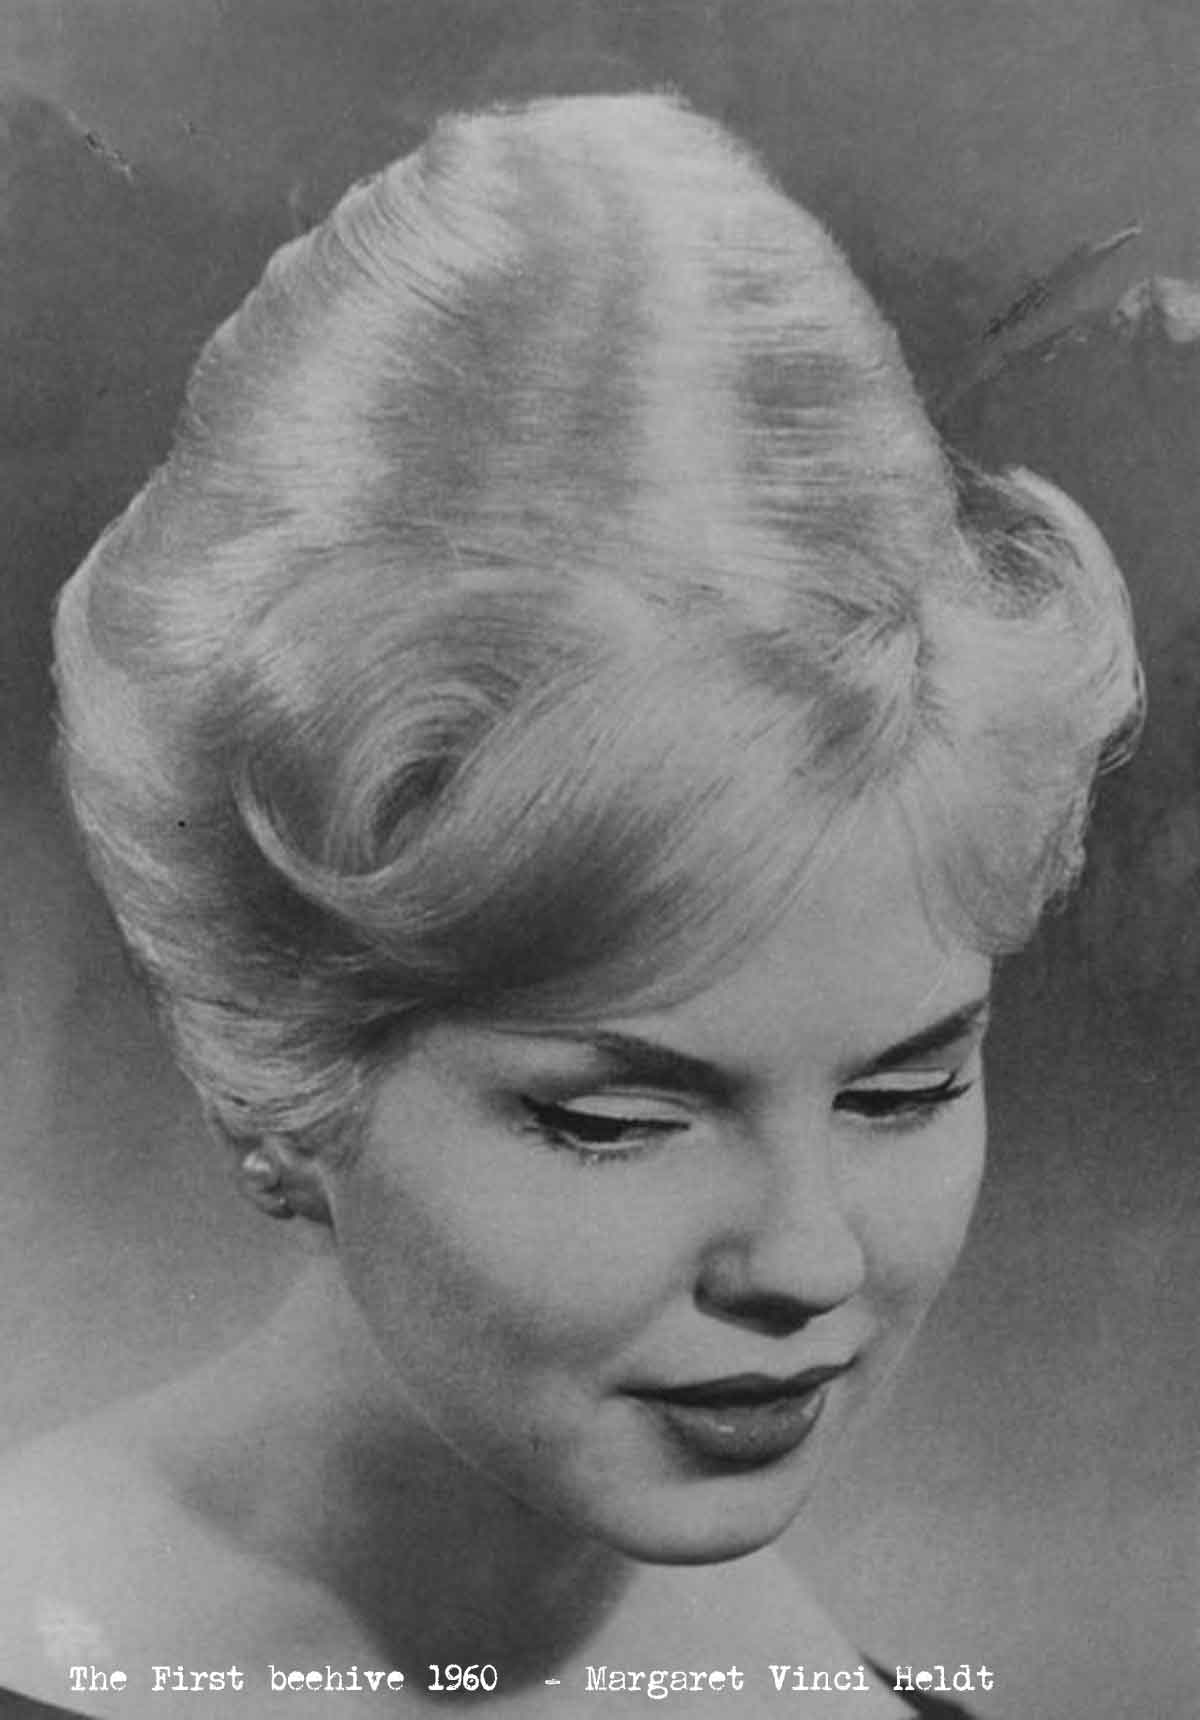 Vinci-Heldt's-beehive-featured-in-February-1960-issue-of-Modern-Beauty-Salon